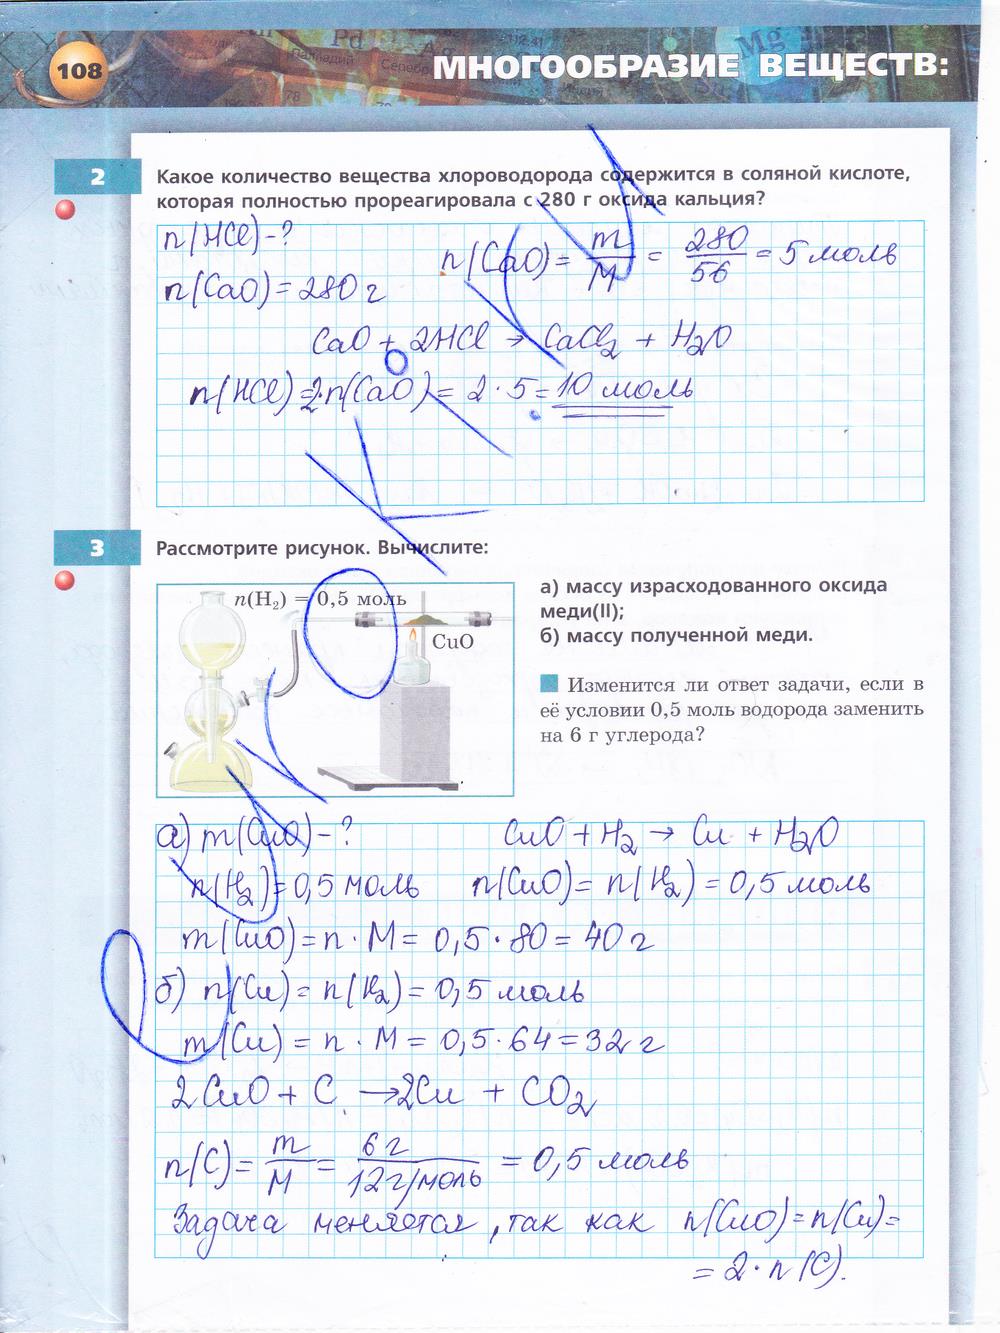 гдз 9 класс тетрадь-тренажёр страница 108 химия Гара